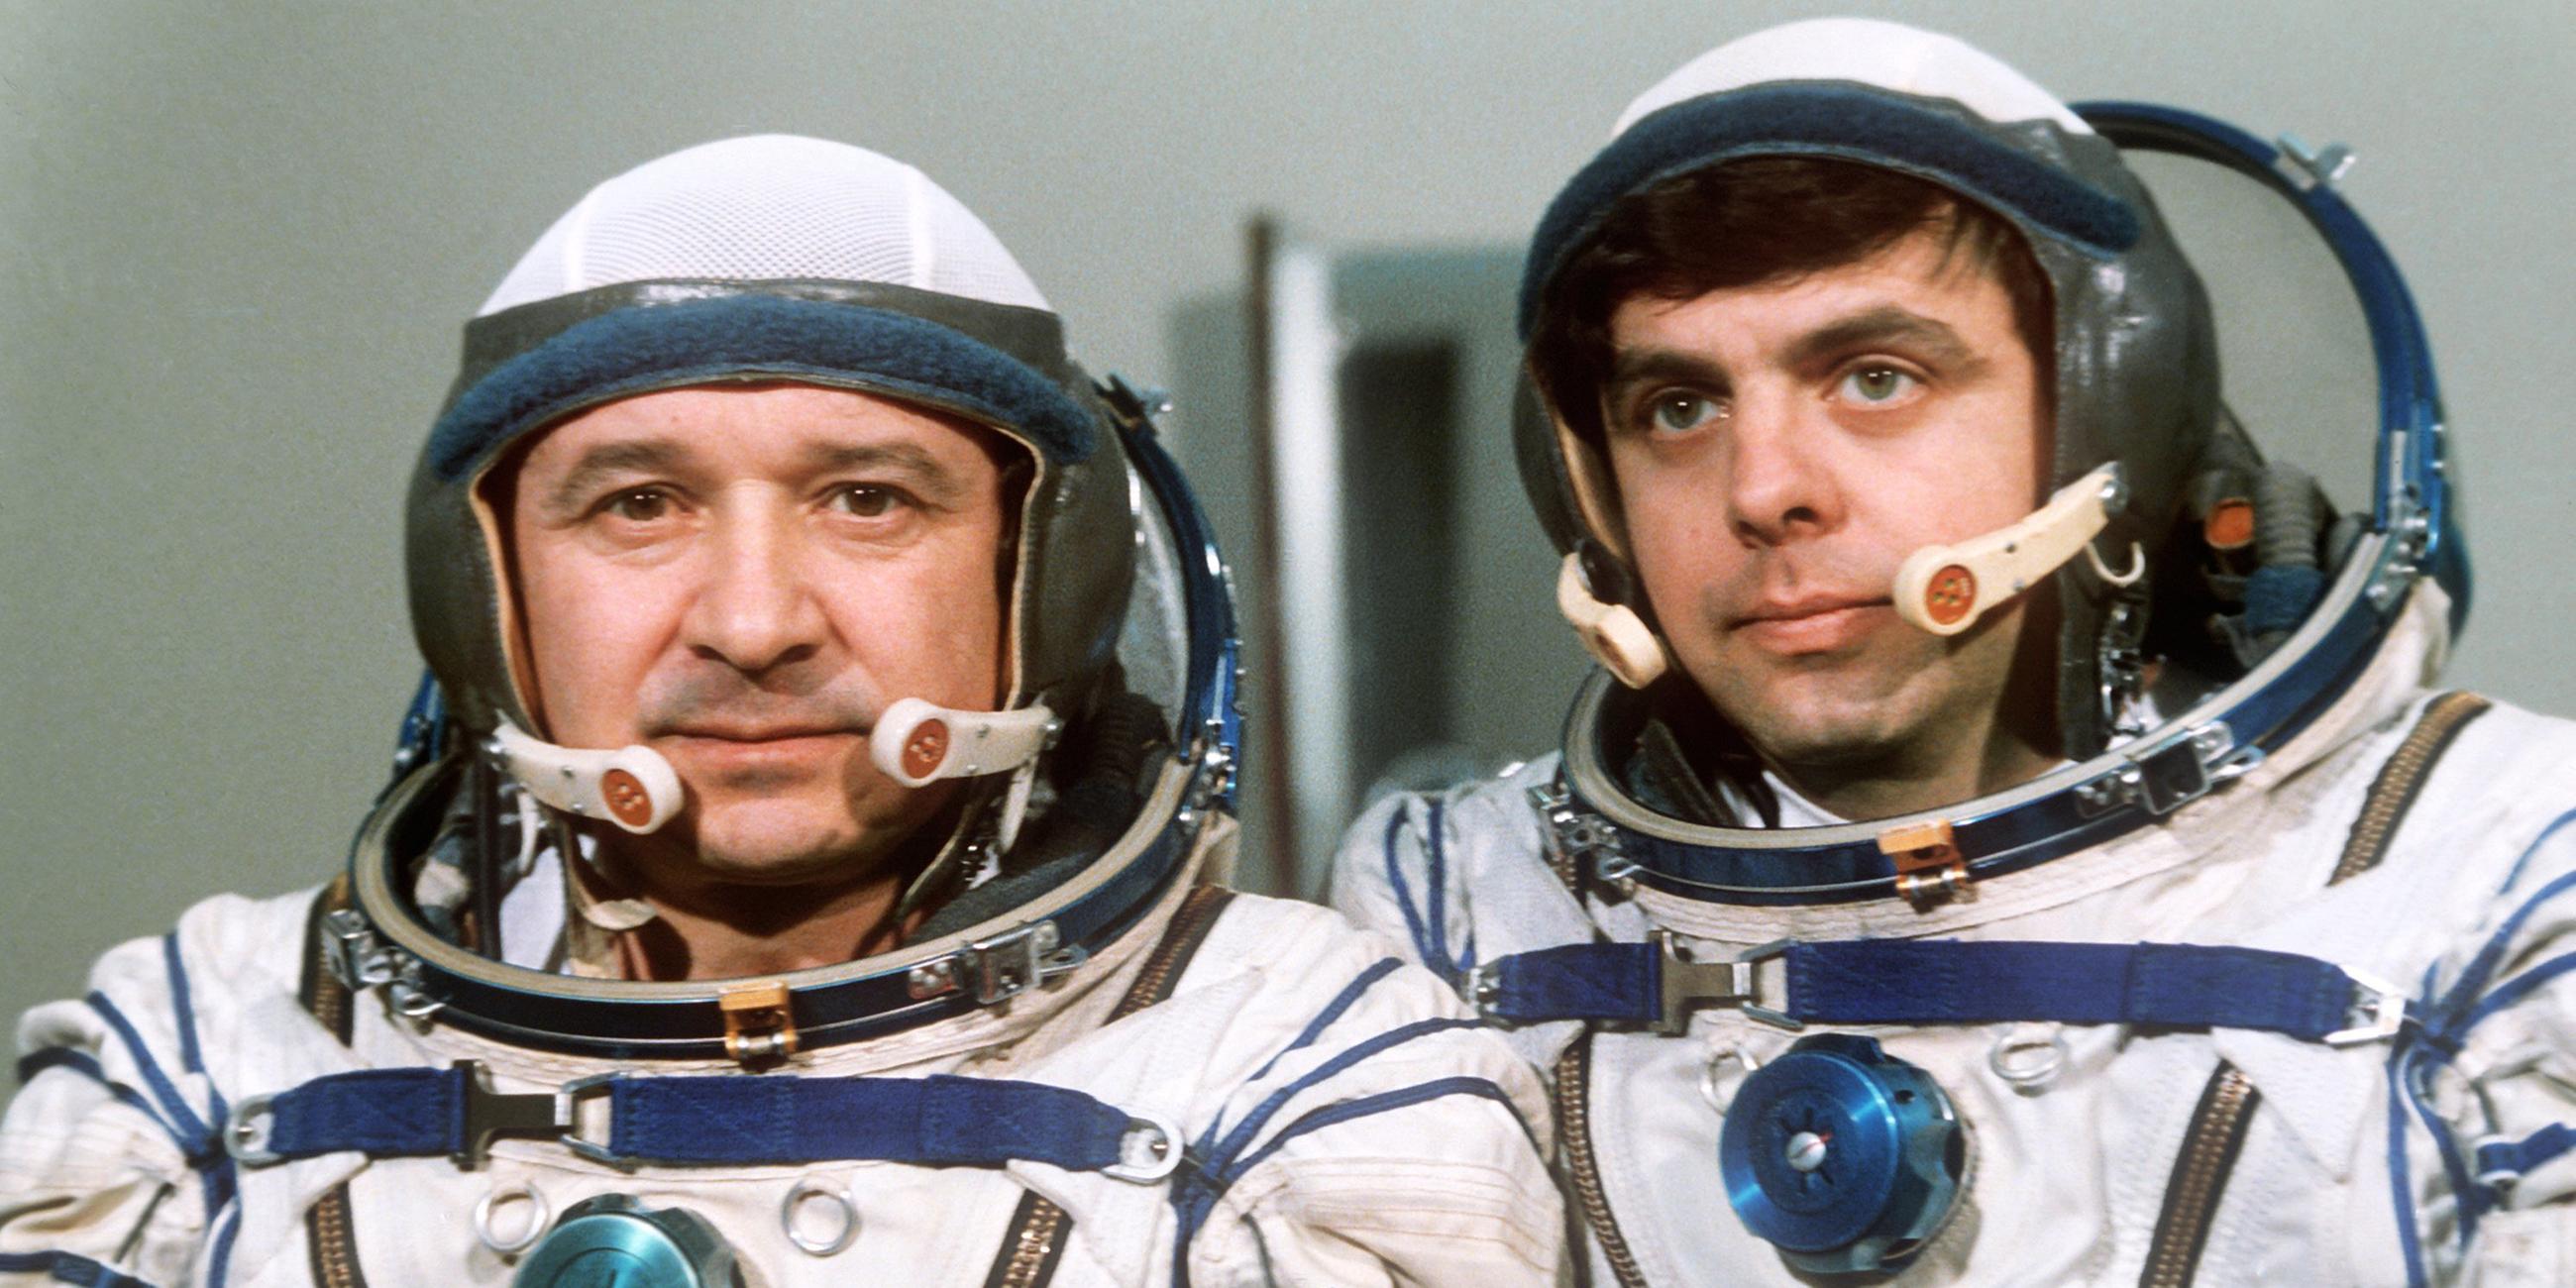 März 1986 - Leonid Kisim und Wladimir Solowjow an Bord der "Mir"